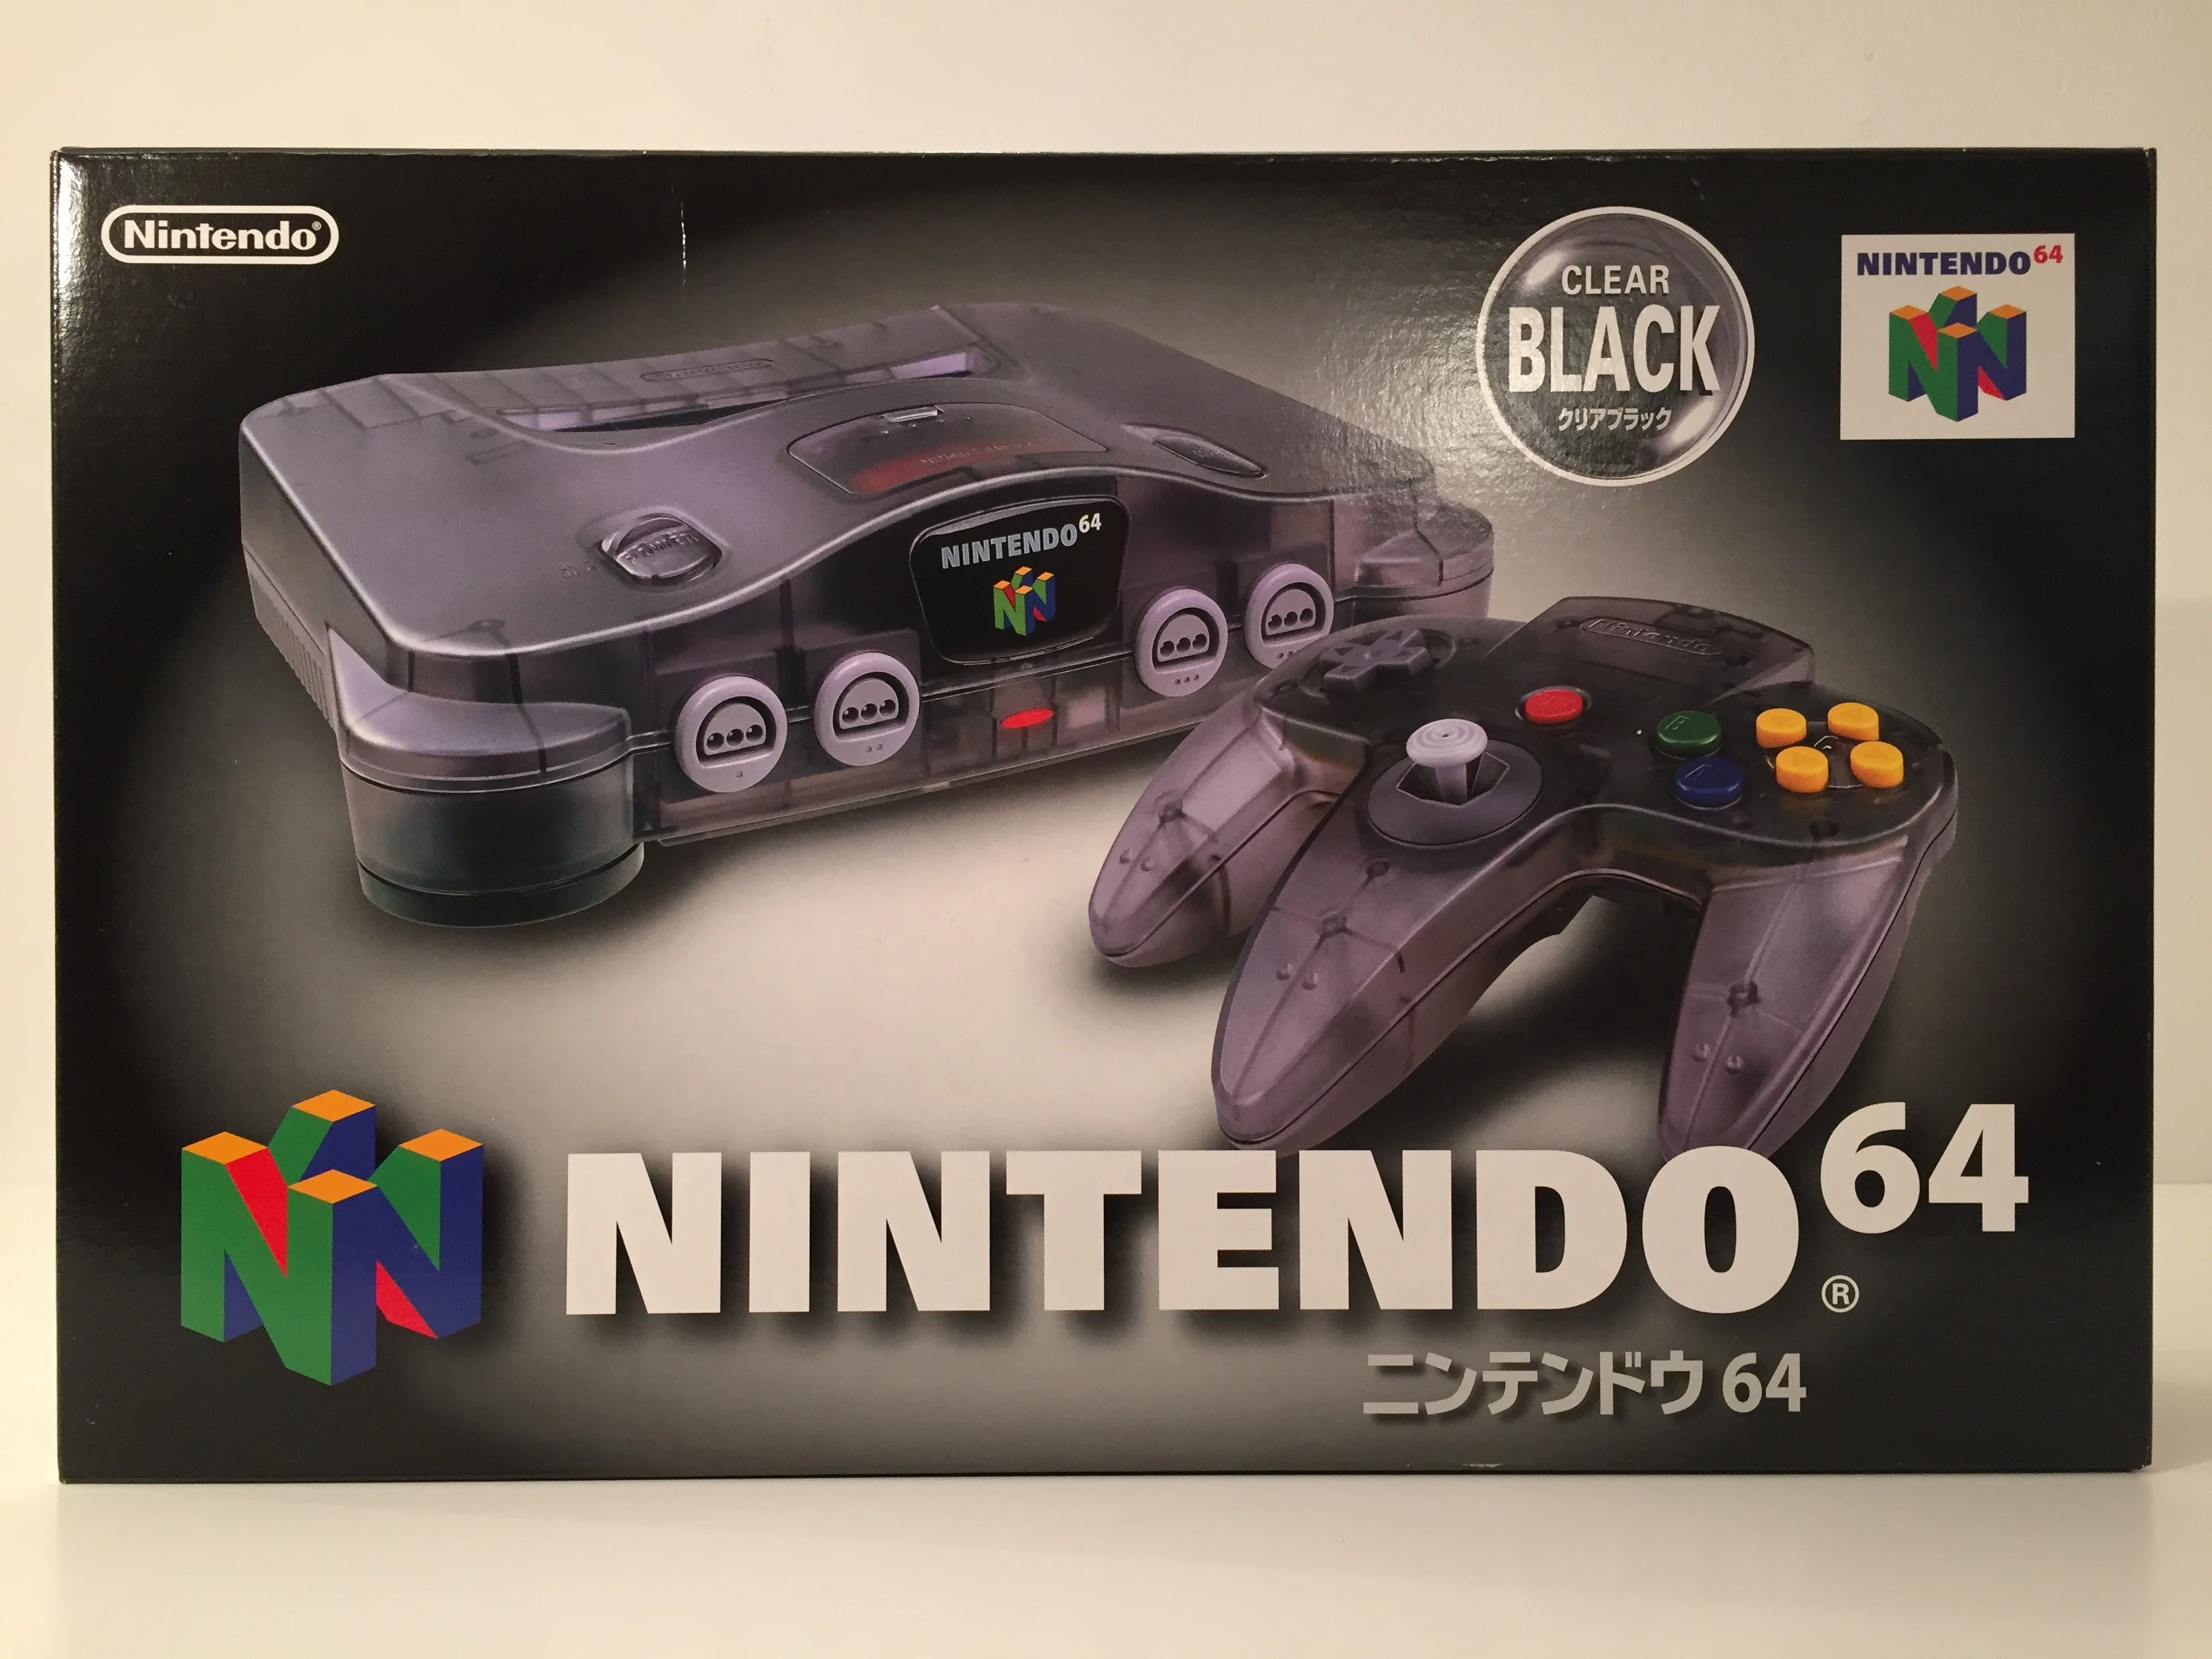  Nintendo 64 Smoke Black Console [JP]